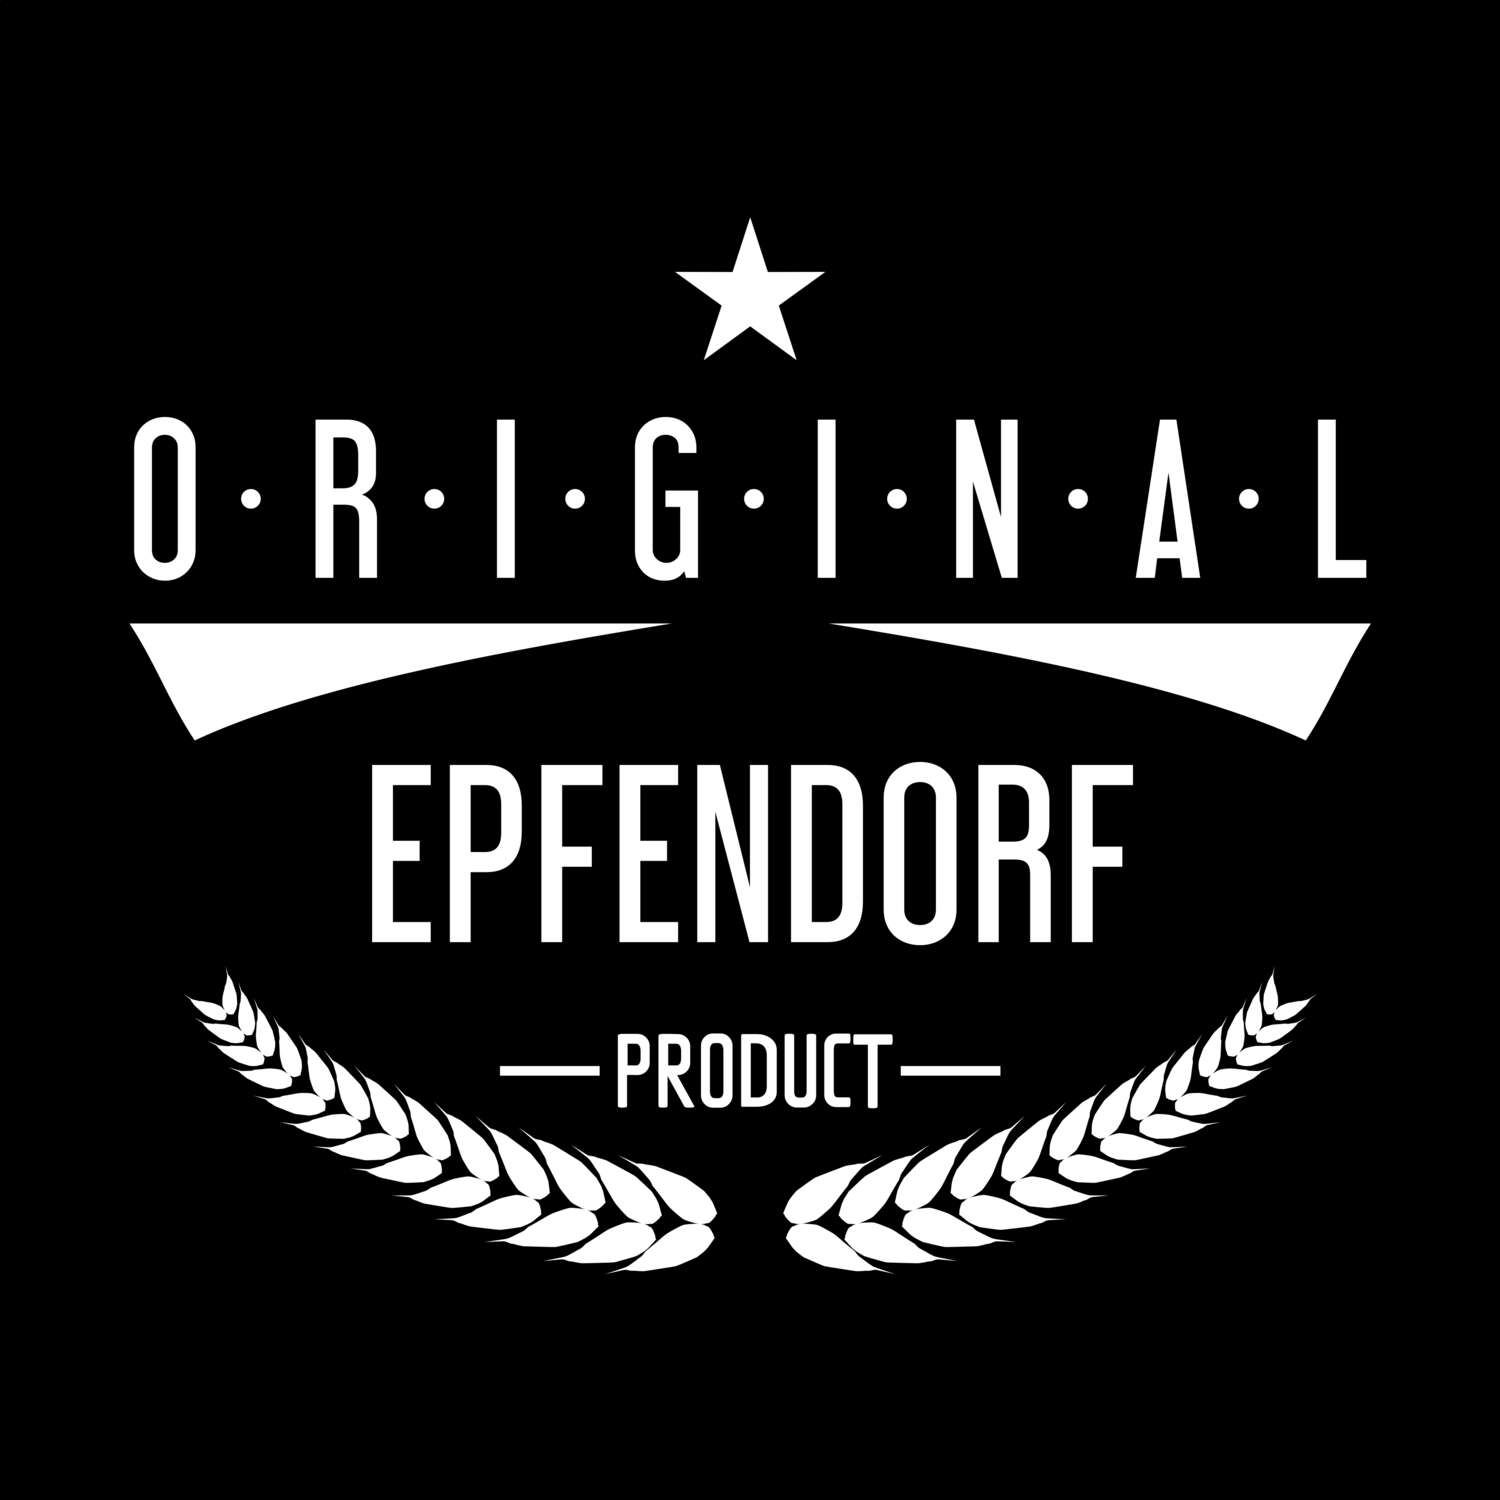 Epfendorf T-Shirt »Original Product«